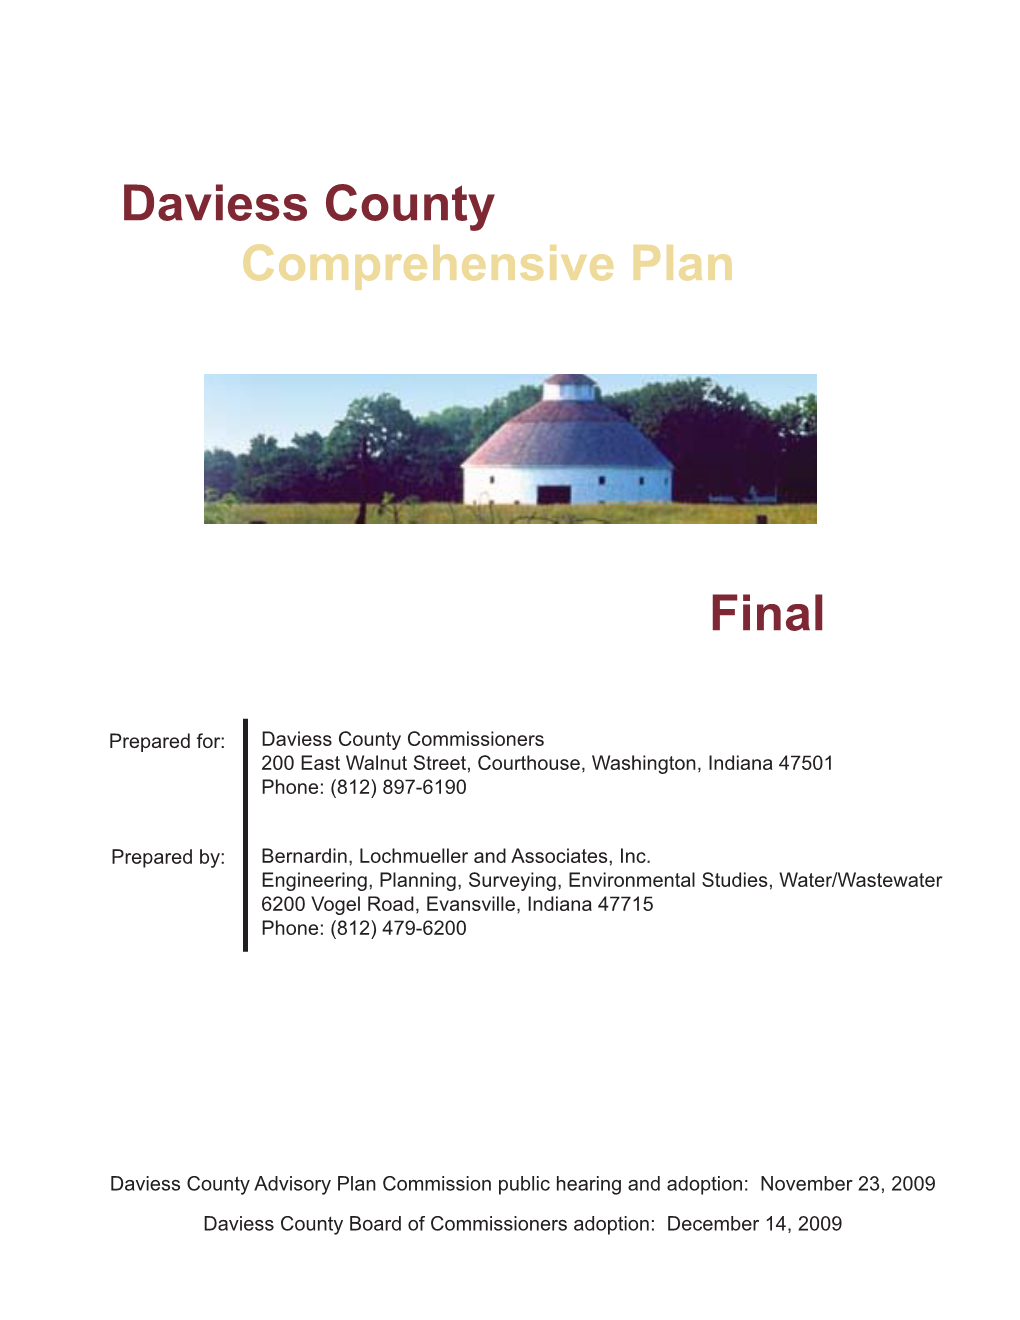 Daviess County Comprehensive Plan, 2009 Bernardin, Lochmueller